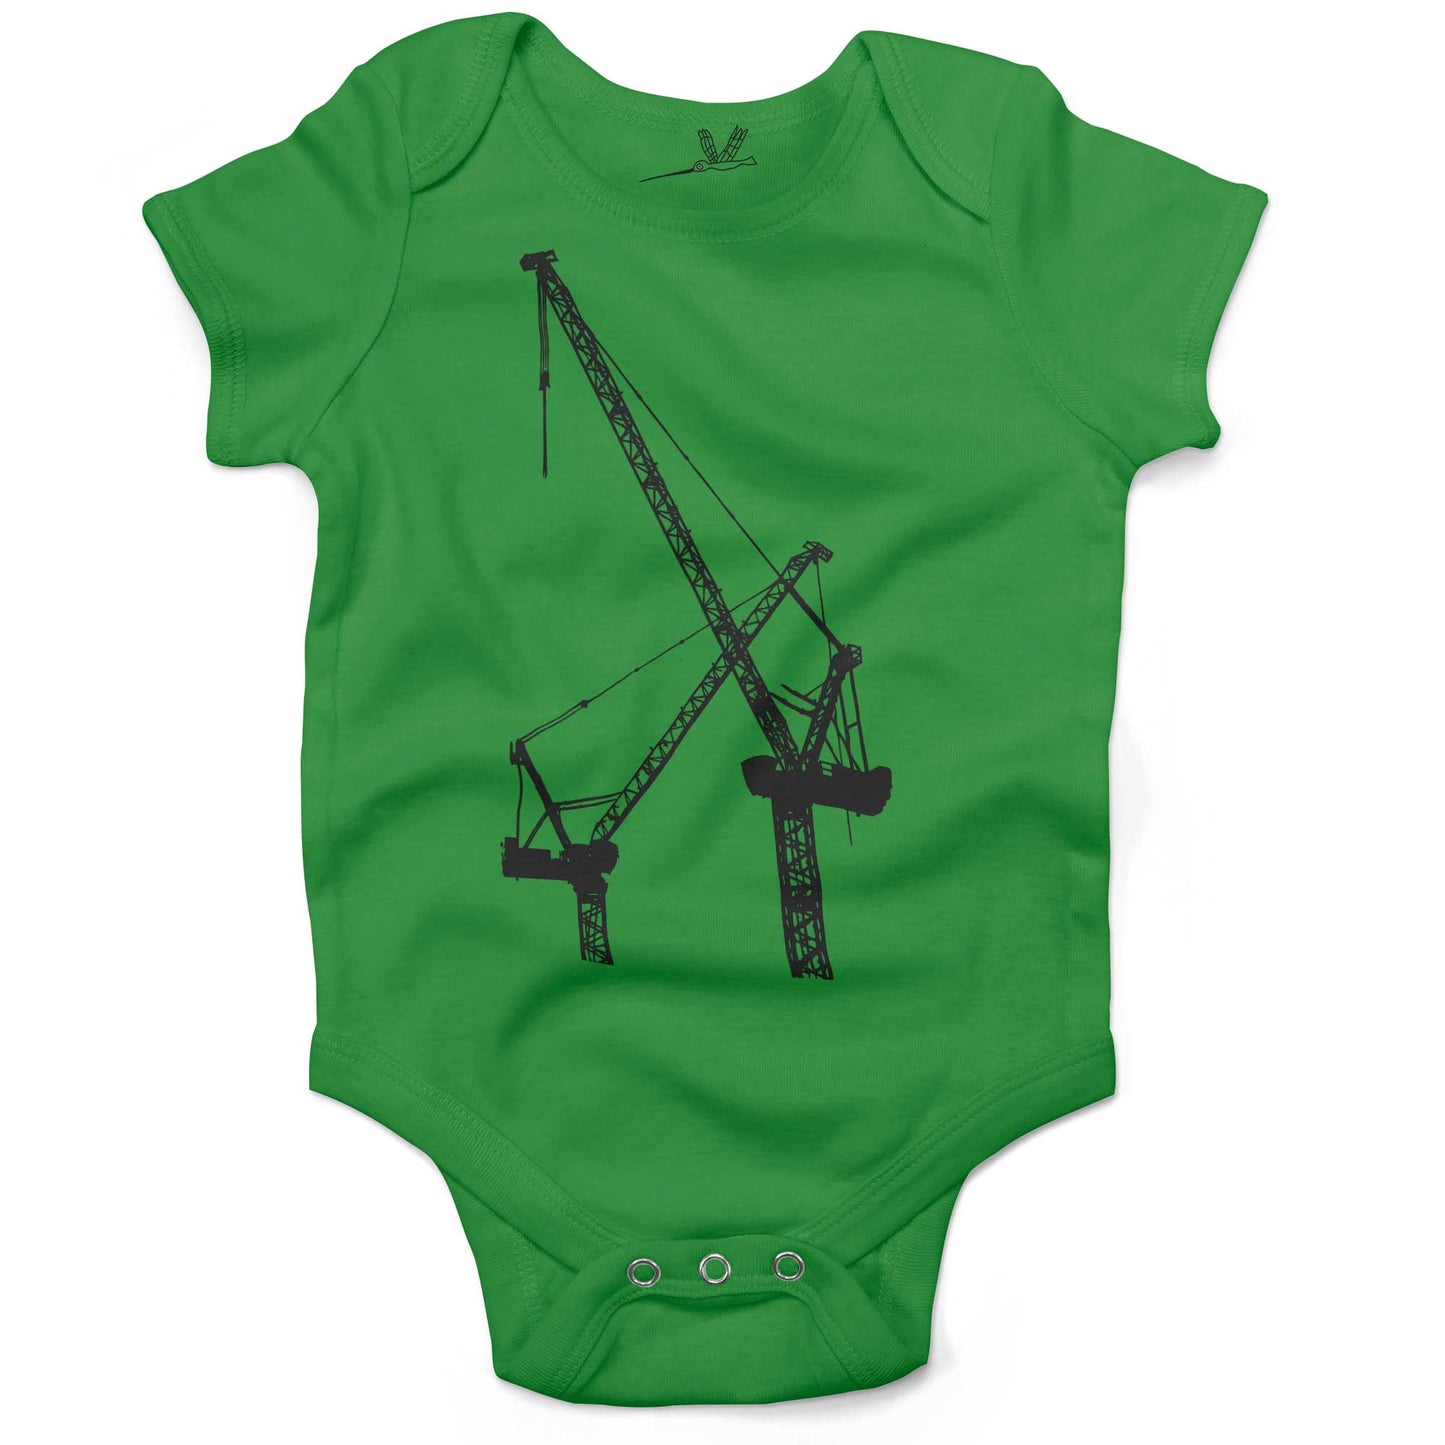 Construction Cranes Infant Bodysuit or Raglan Tee-Grass Green-3-6 months